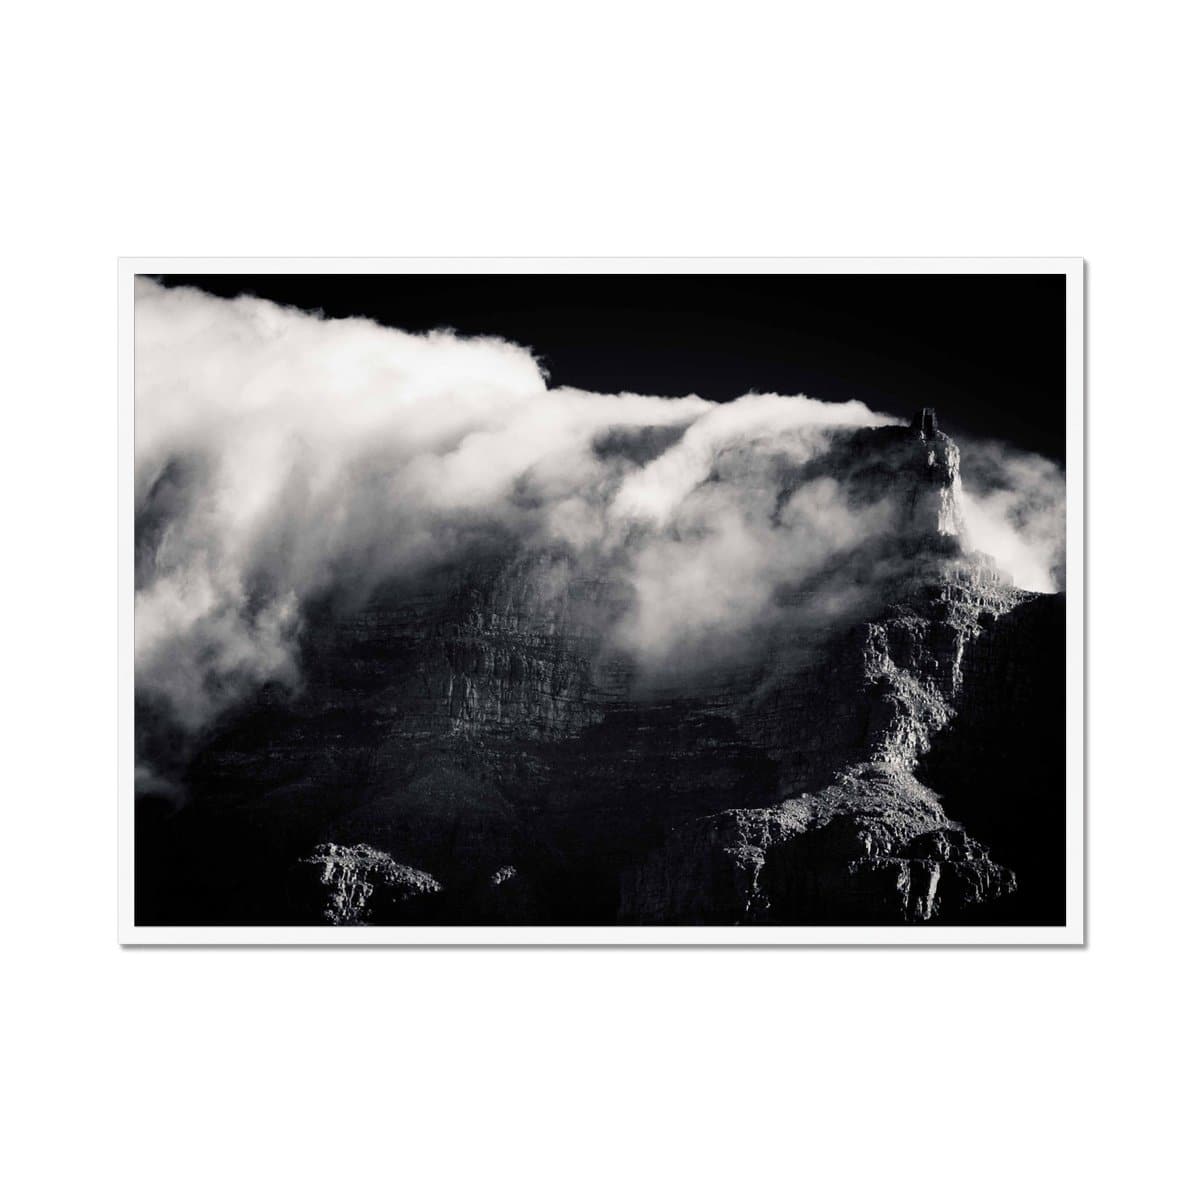 Shrouded Mountain - Sean Lee-Davies Sean Lee Davies